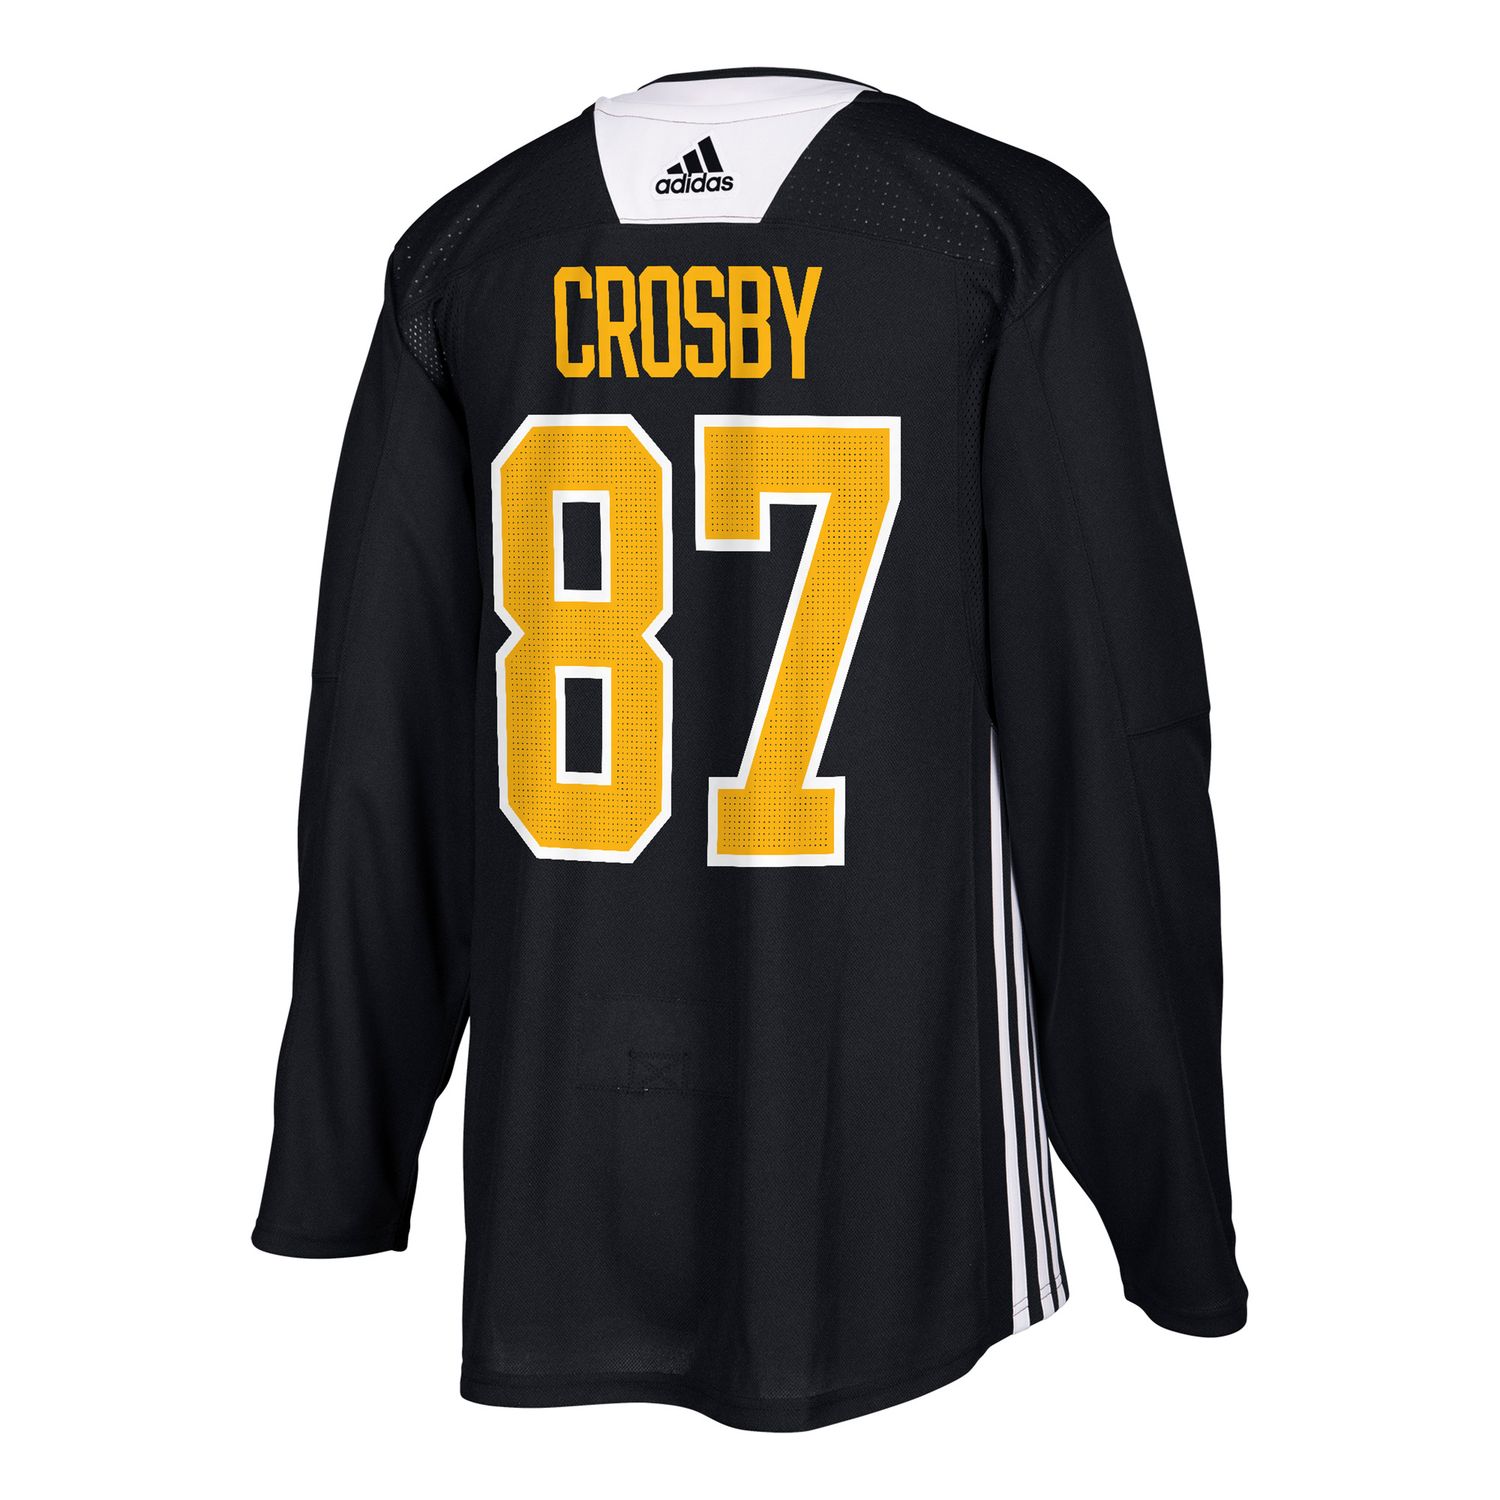 sidney crosby jersey adidas